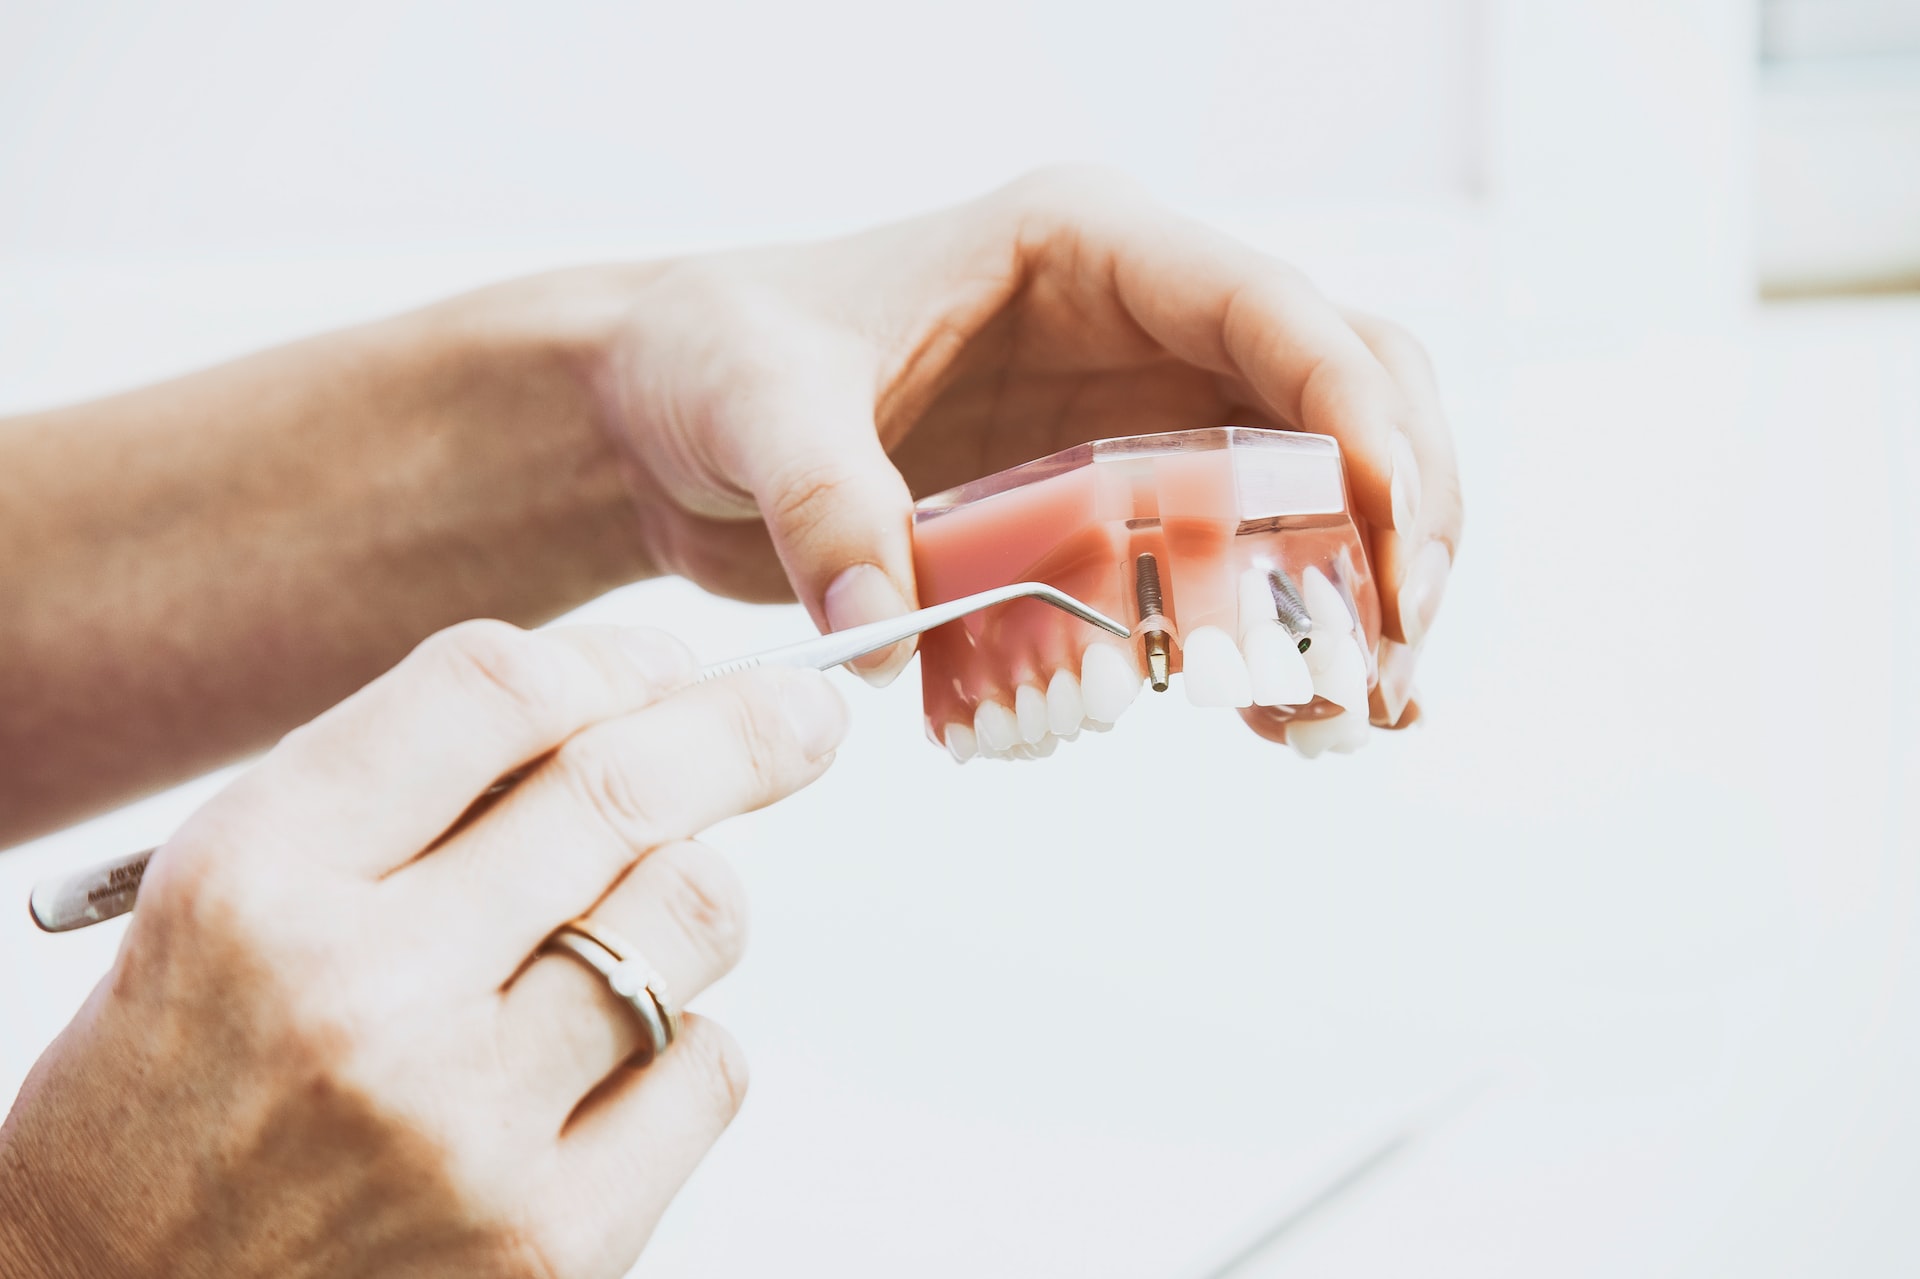 treatment for receding gums